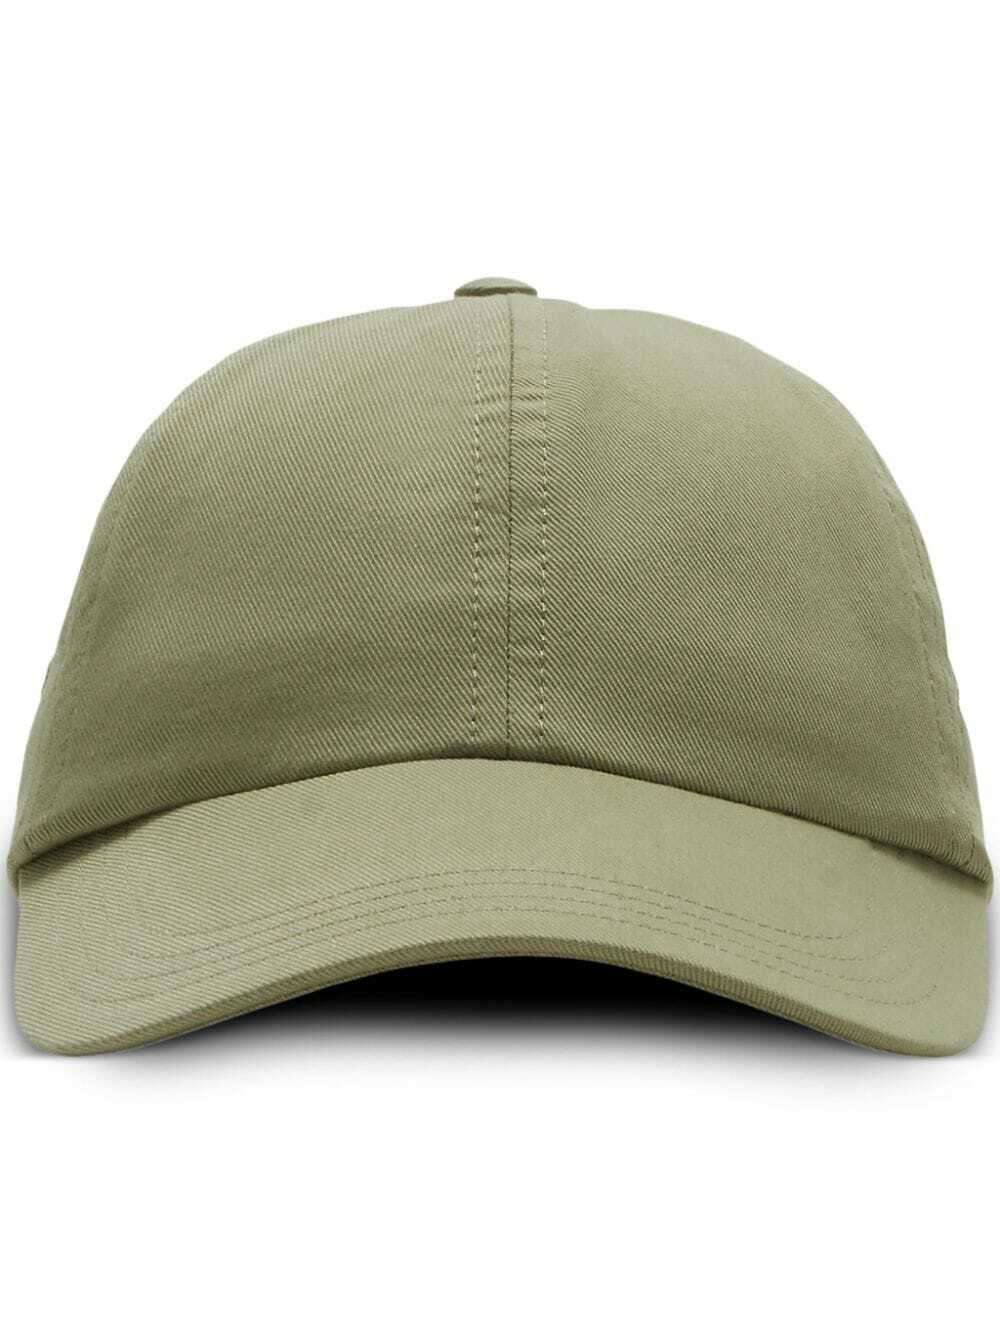 Burberry - Checked Cotton-Blend Twill Bucket Hat - Neutrals Burberry